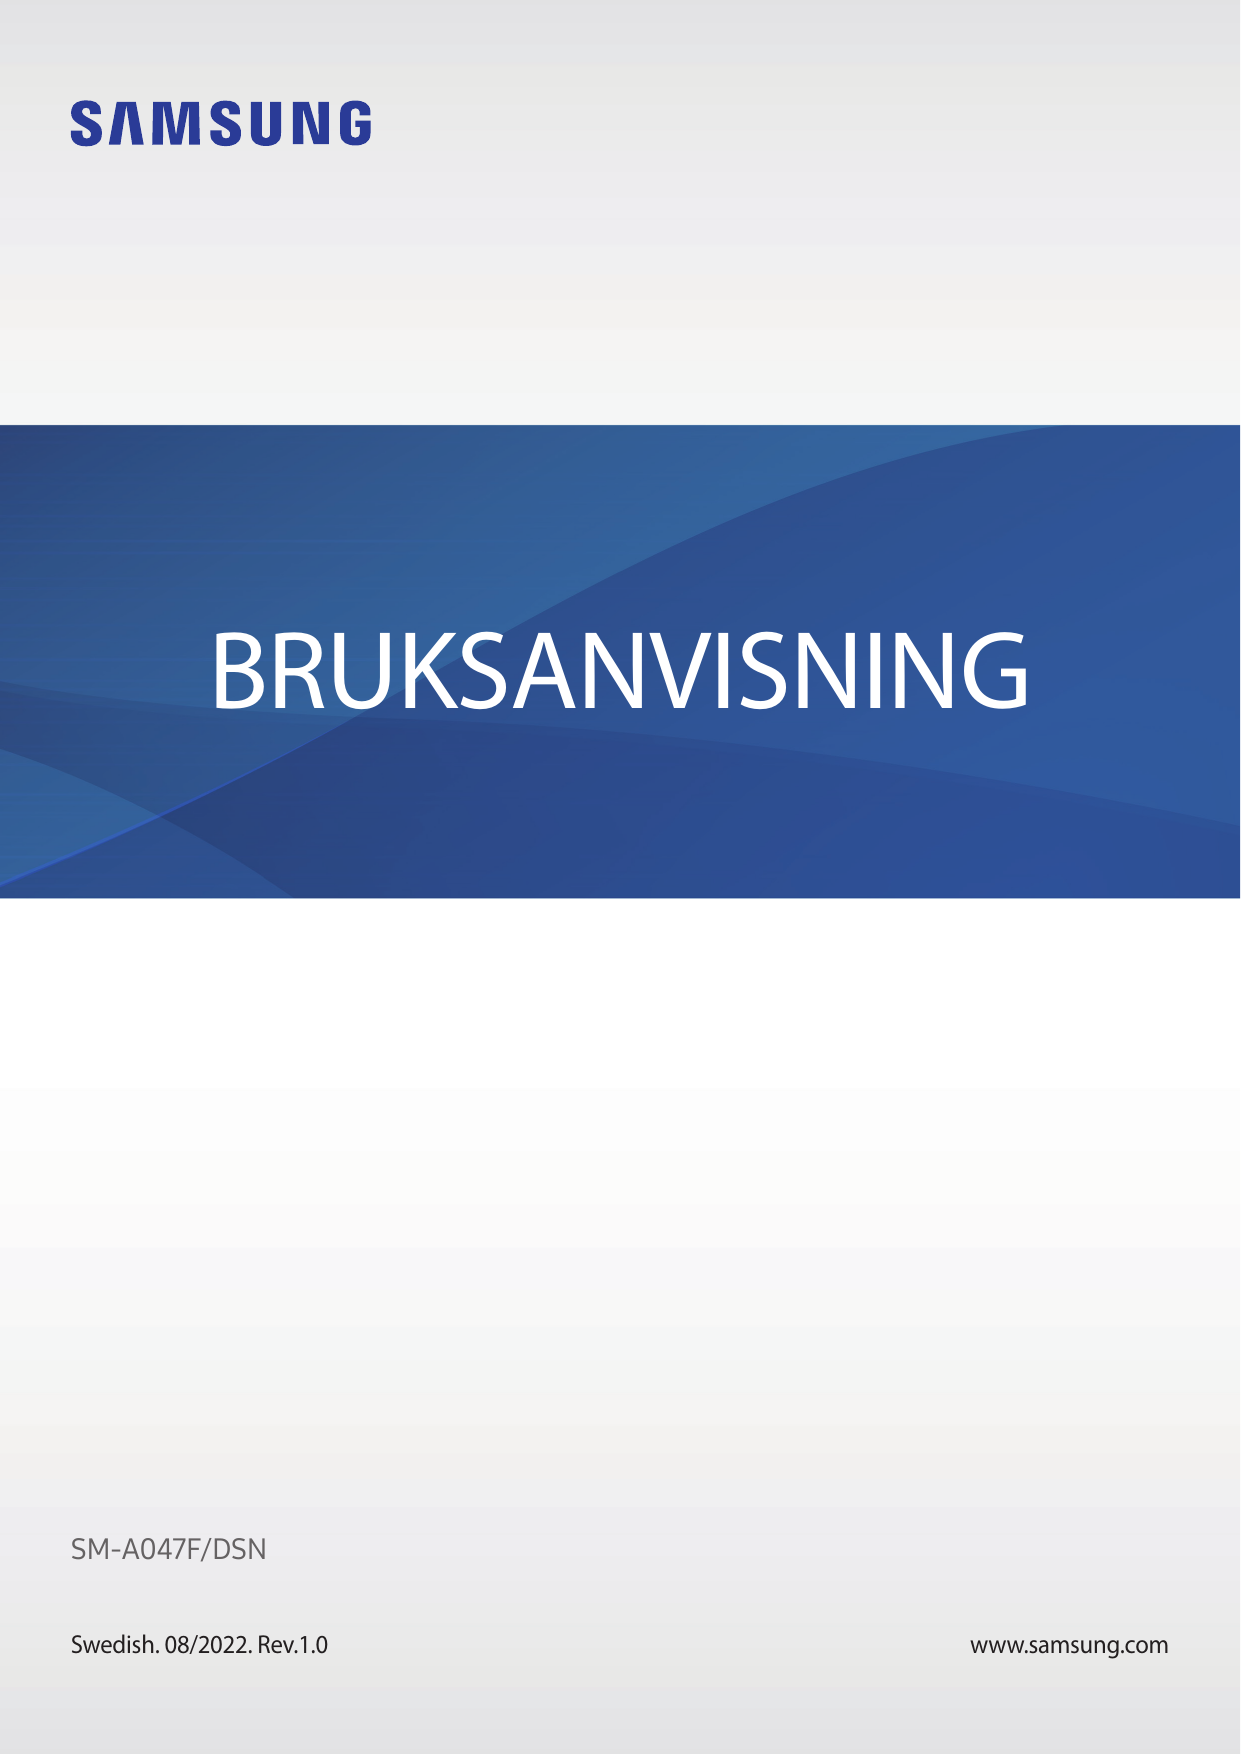 BRUKSANVISNINGSM-A047F/DSNSwedish. 08/2022. Rev.1.0www.samsung.com